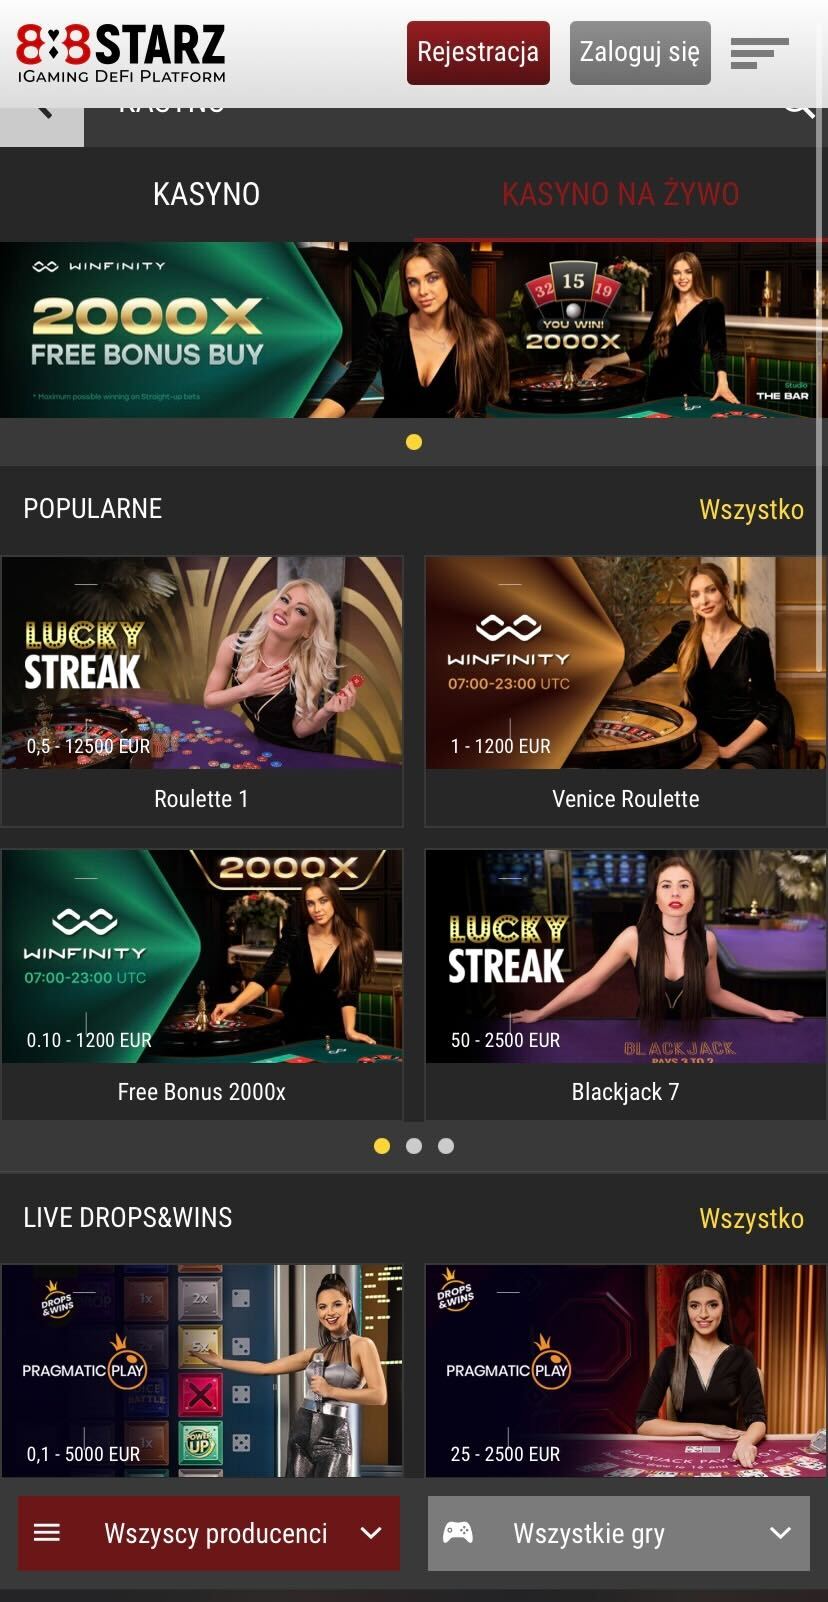 888Starz Casino Mobile Review